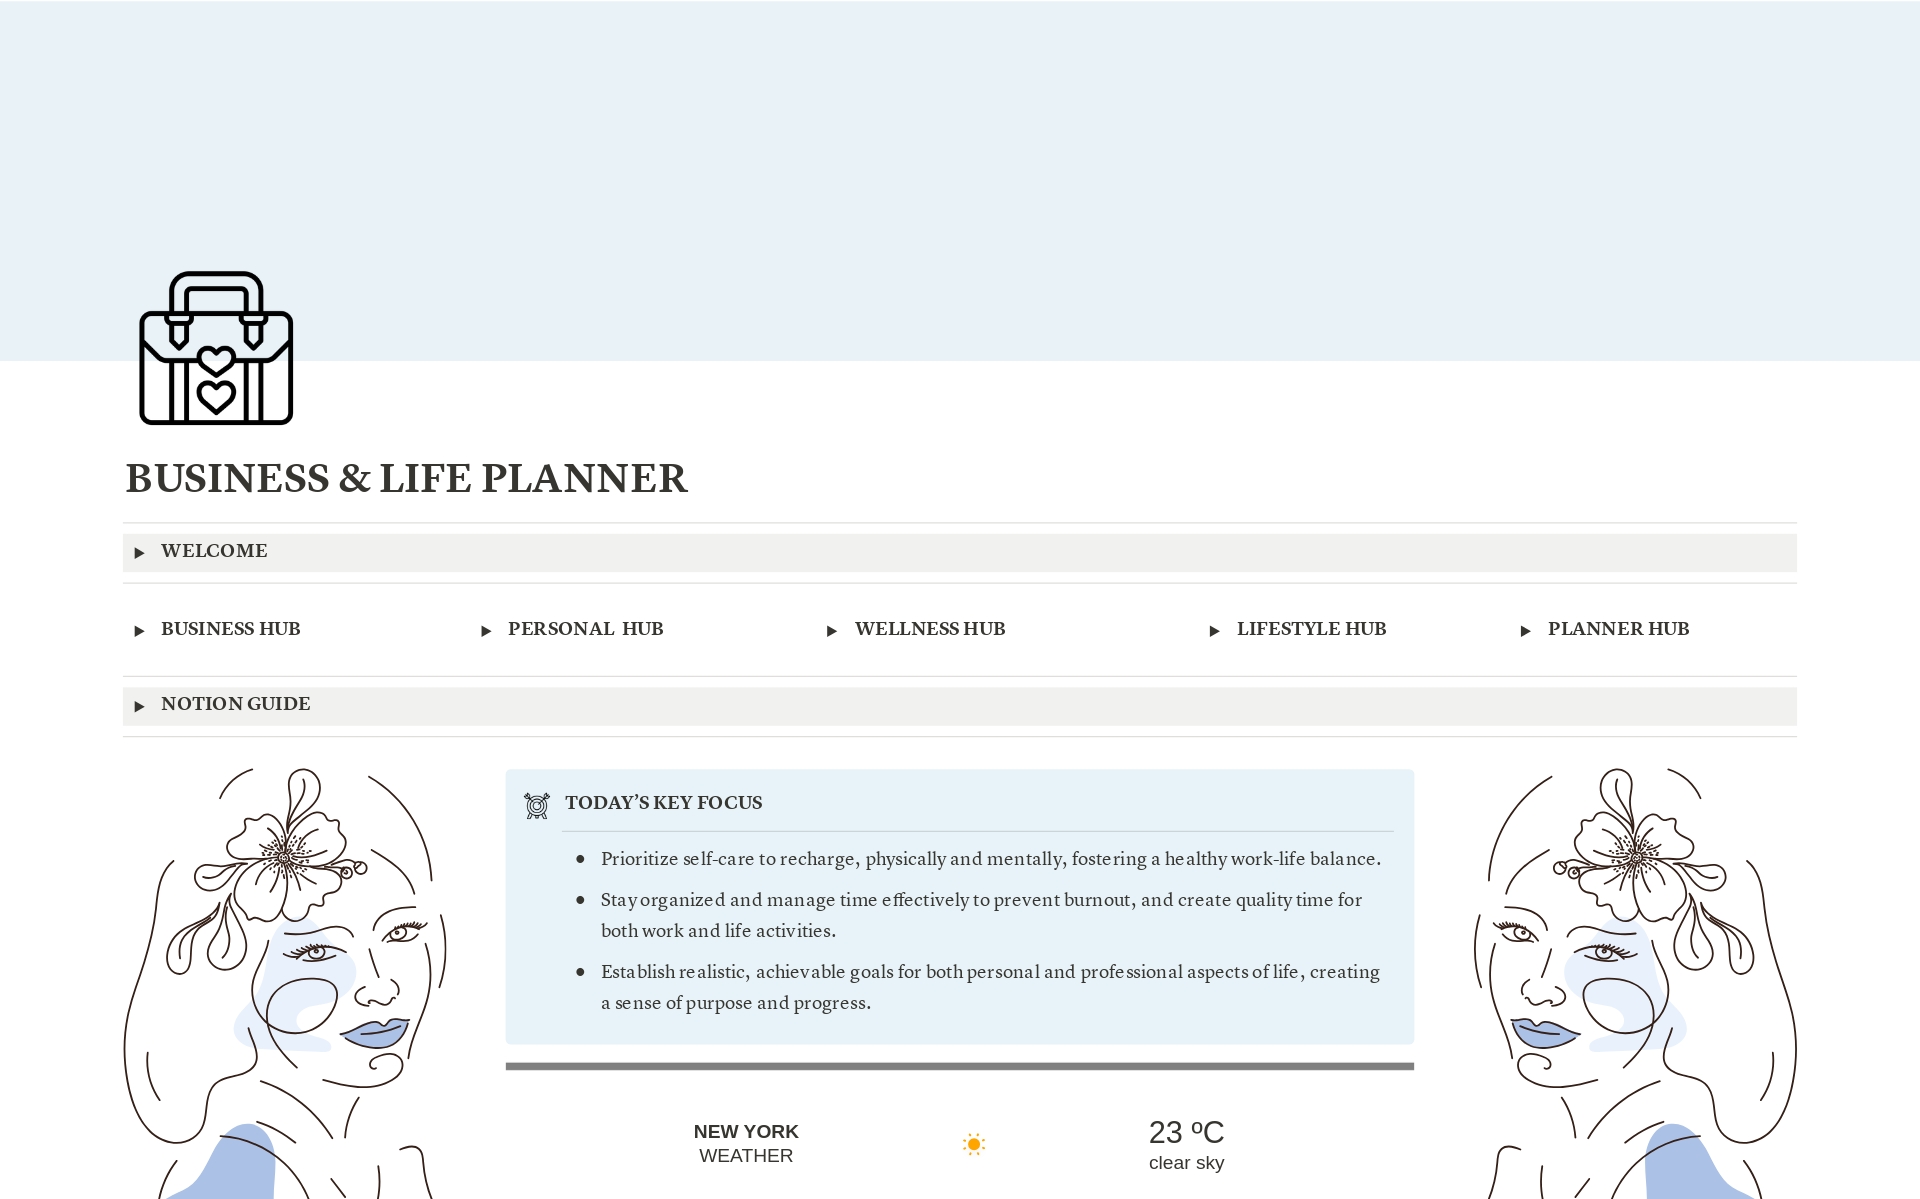 Vista previa de una plantilla para Blue Business & Life Planner